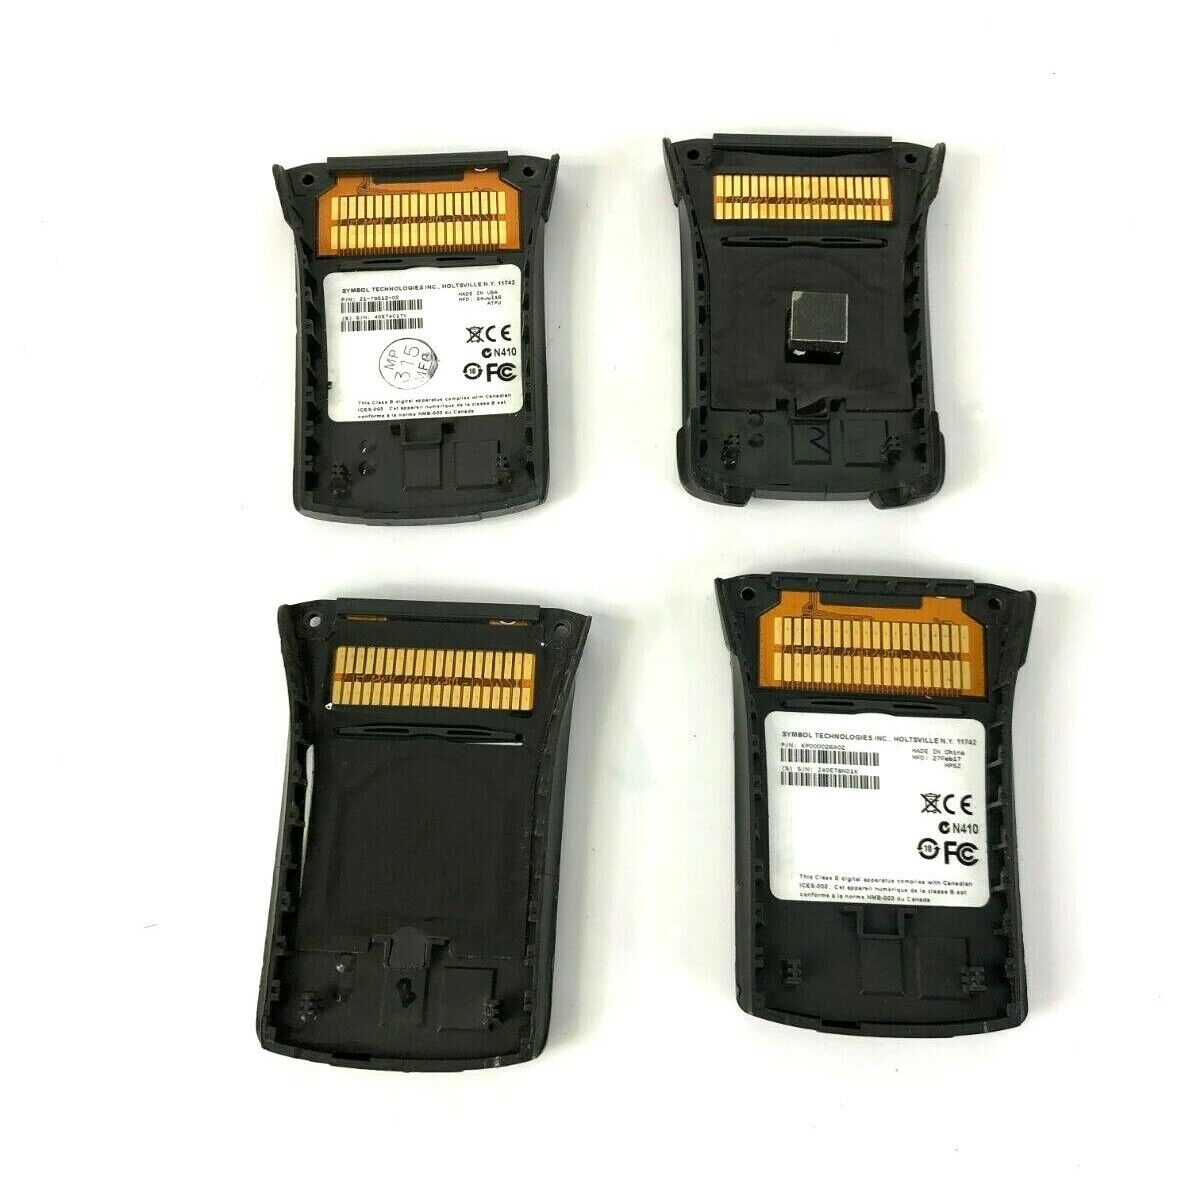 Lot of 4 Genuine Motorola MC9090 MC9190 53 Key Standard Keypad KP000026A02